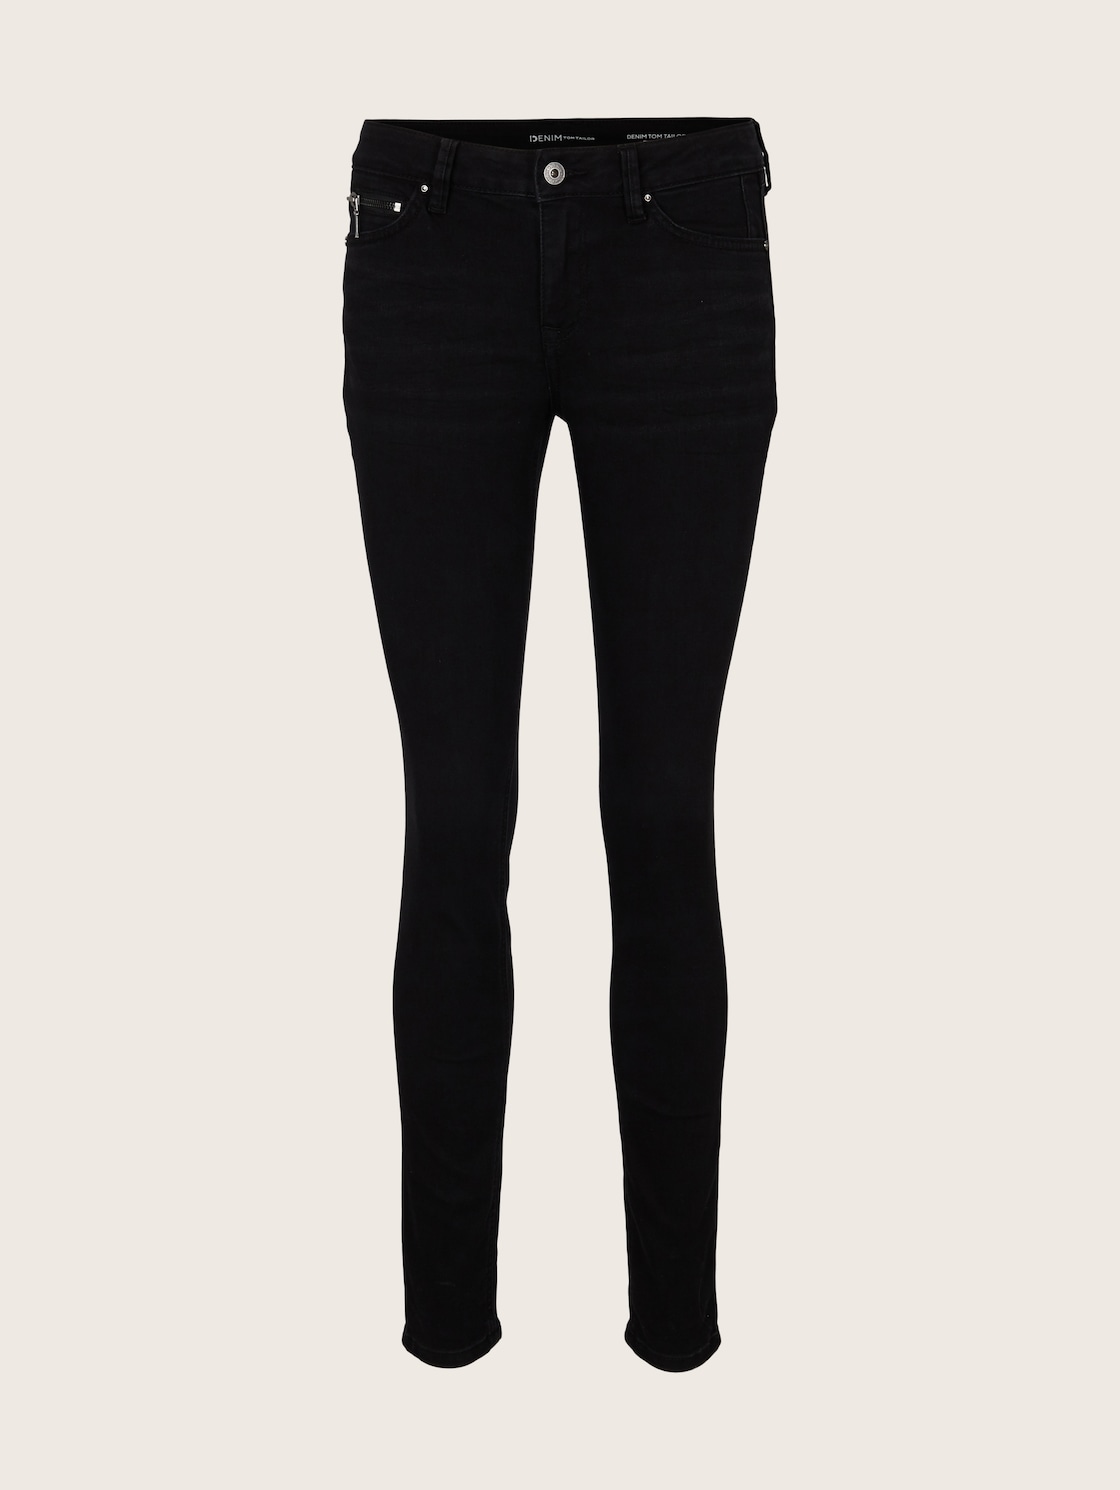 TOM TAILOR DENIM Damen Jona Extra Skinny Jeans mit recyceltem Polyester, schwarz, Uni, Gr. 28/30 von Tom Tailor Denim